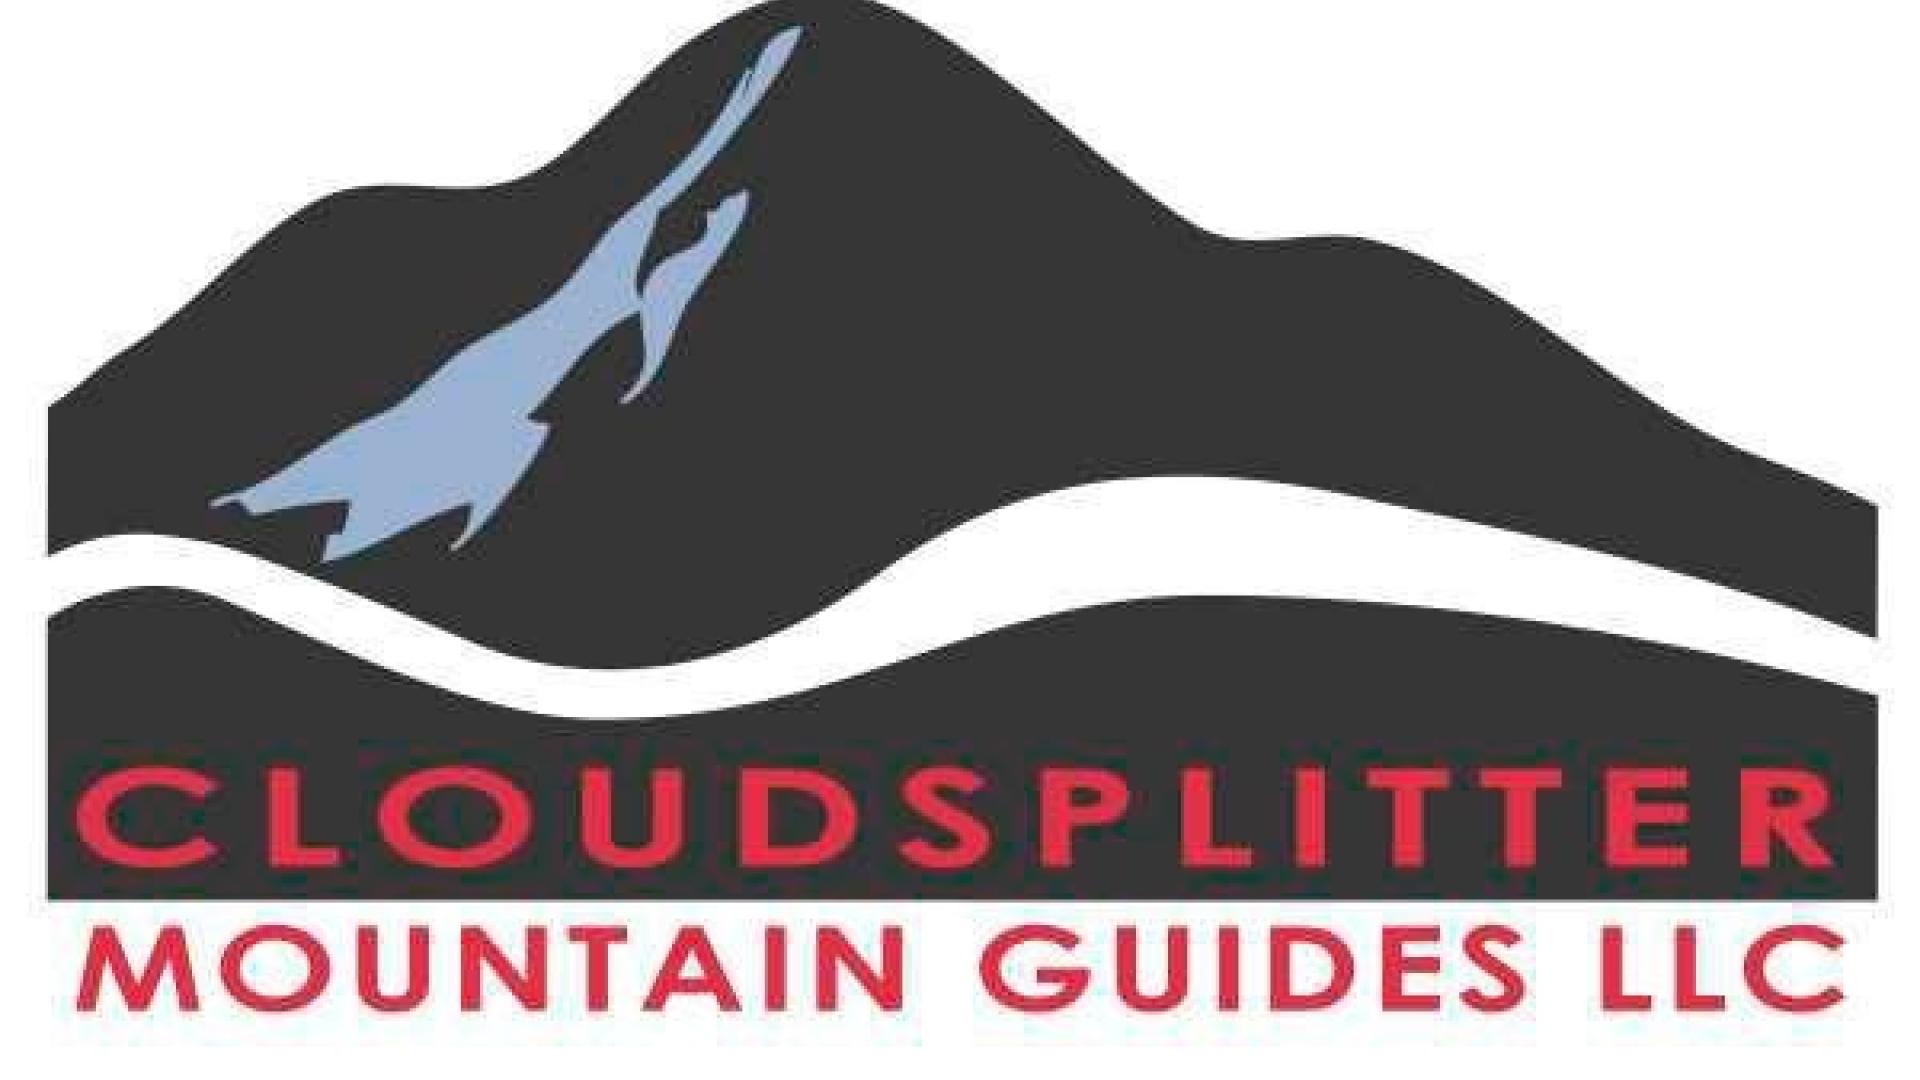 Cloudsplitter Mountain Guides